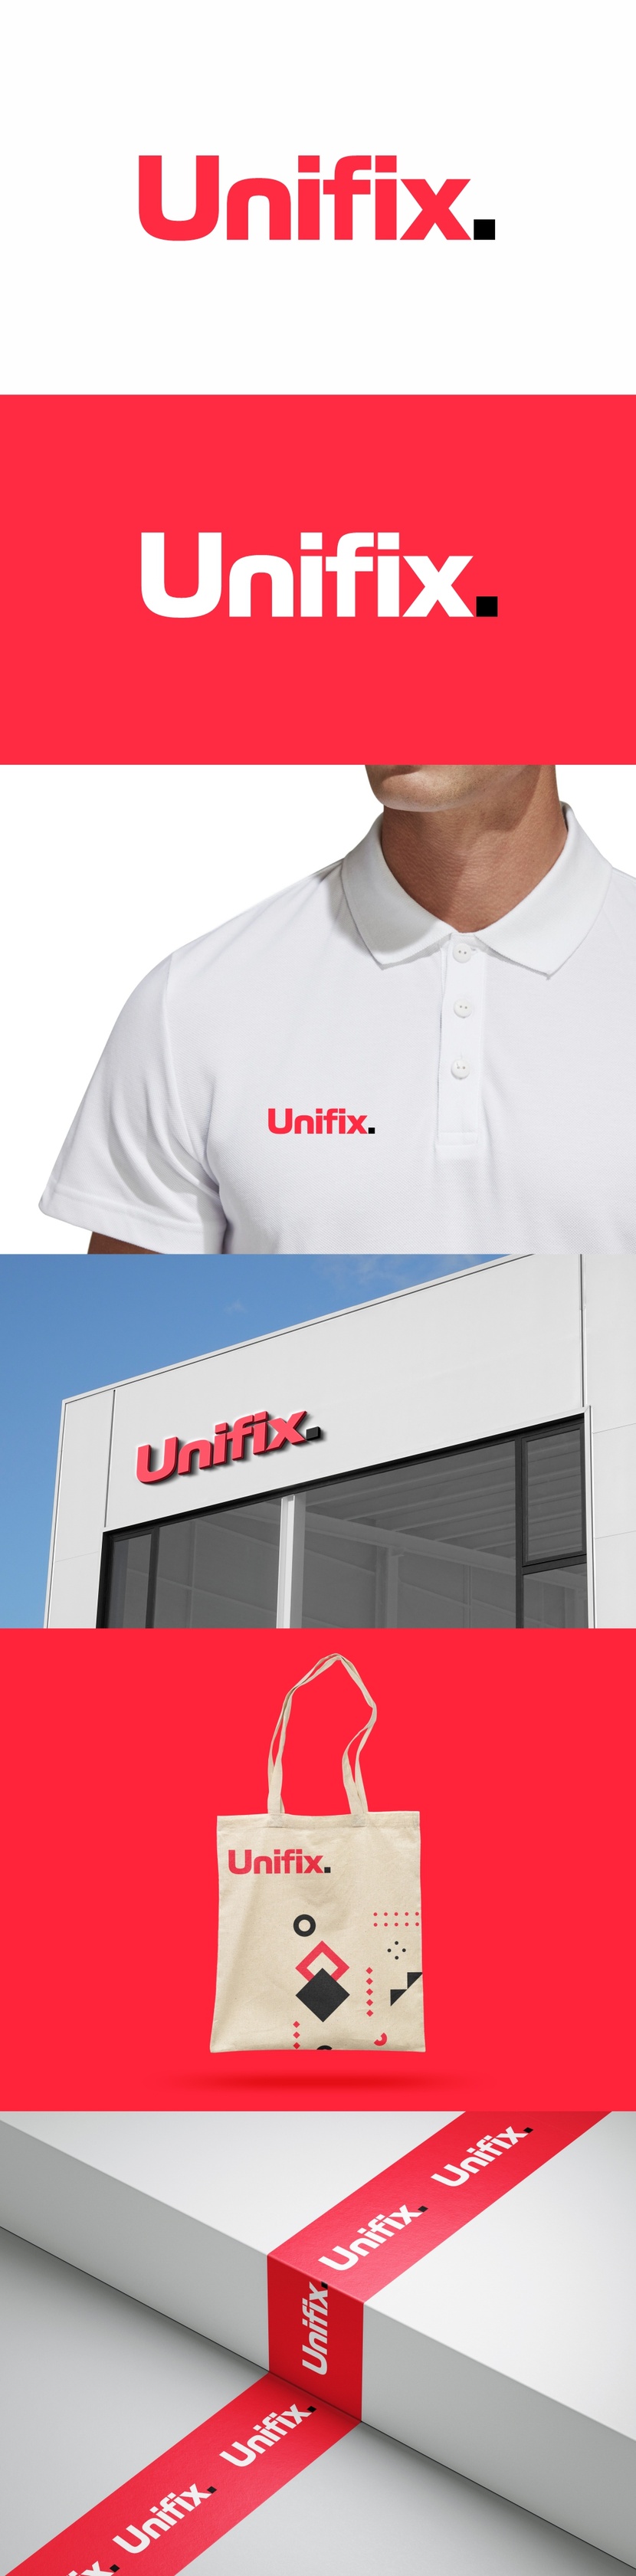 Разработка логотипа строительного интернет магазина Unifix  -  автор EVGENIA ZHURANOVA